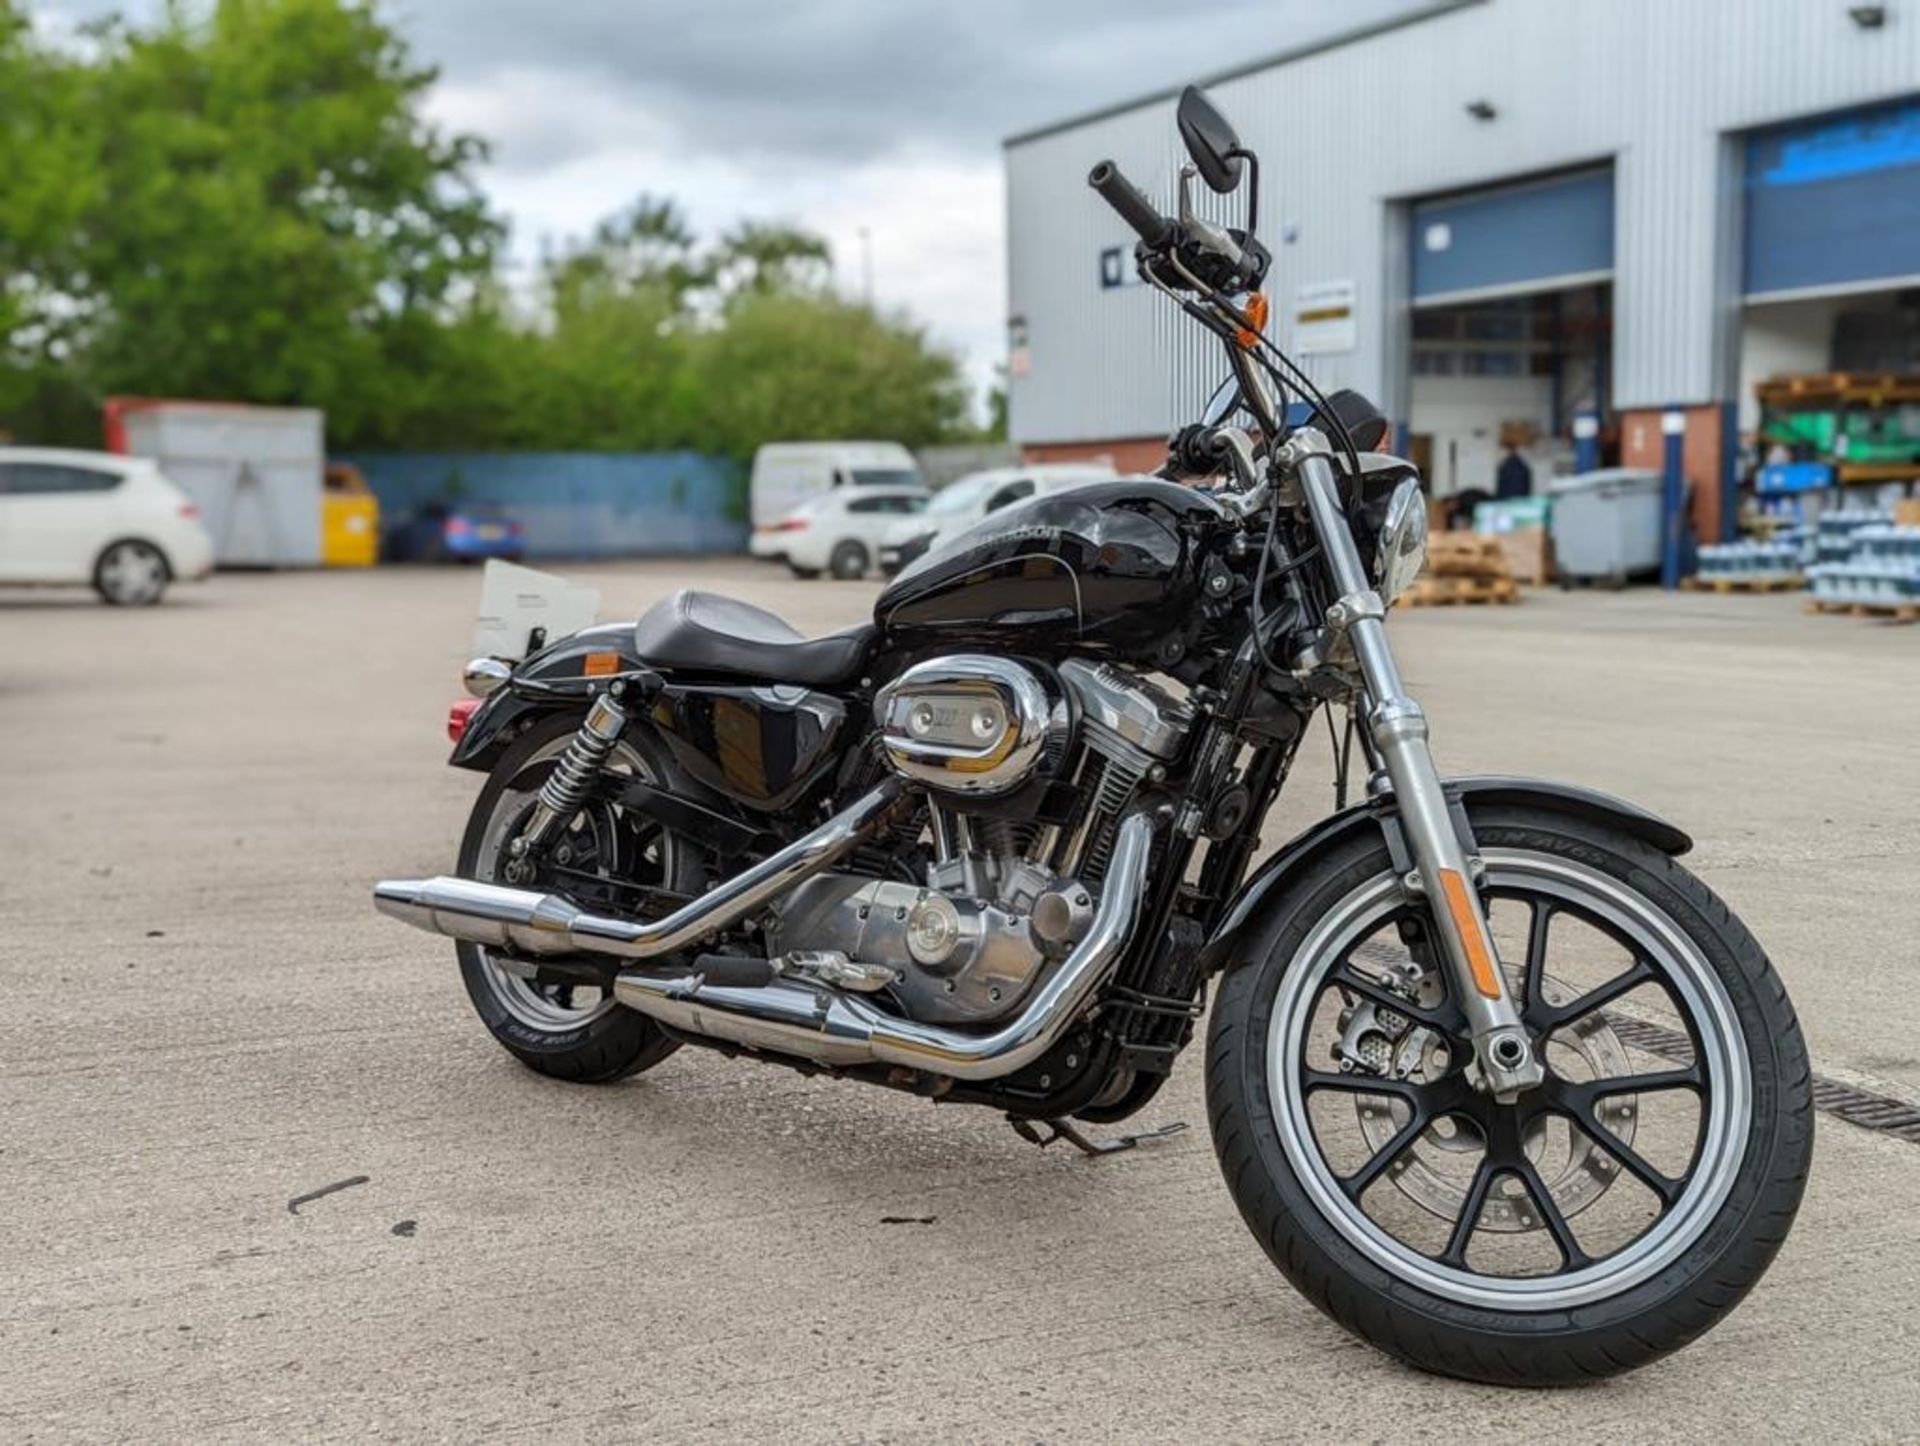 2016 Harley Davidson 883 Sportster Superlow - CL734 - NO VAT ON THE HAMMER - Location: Altrincham - Image 2 of 11